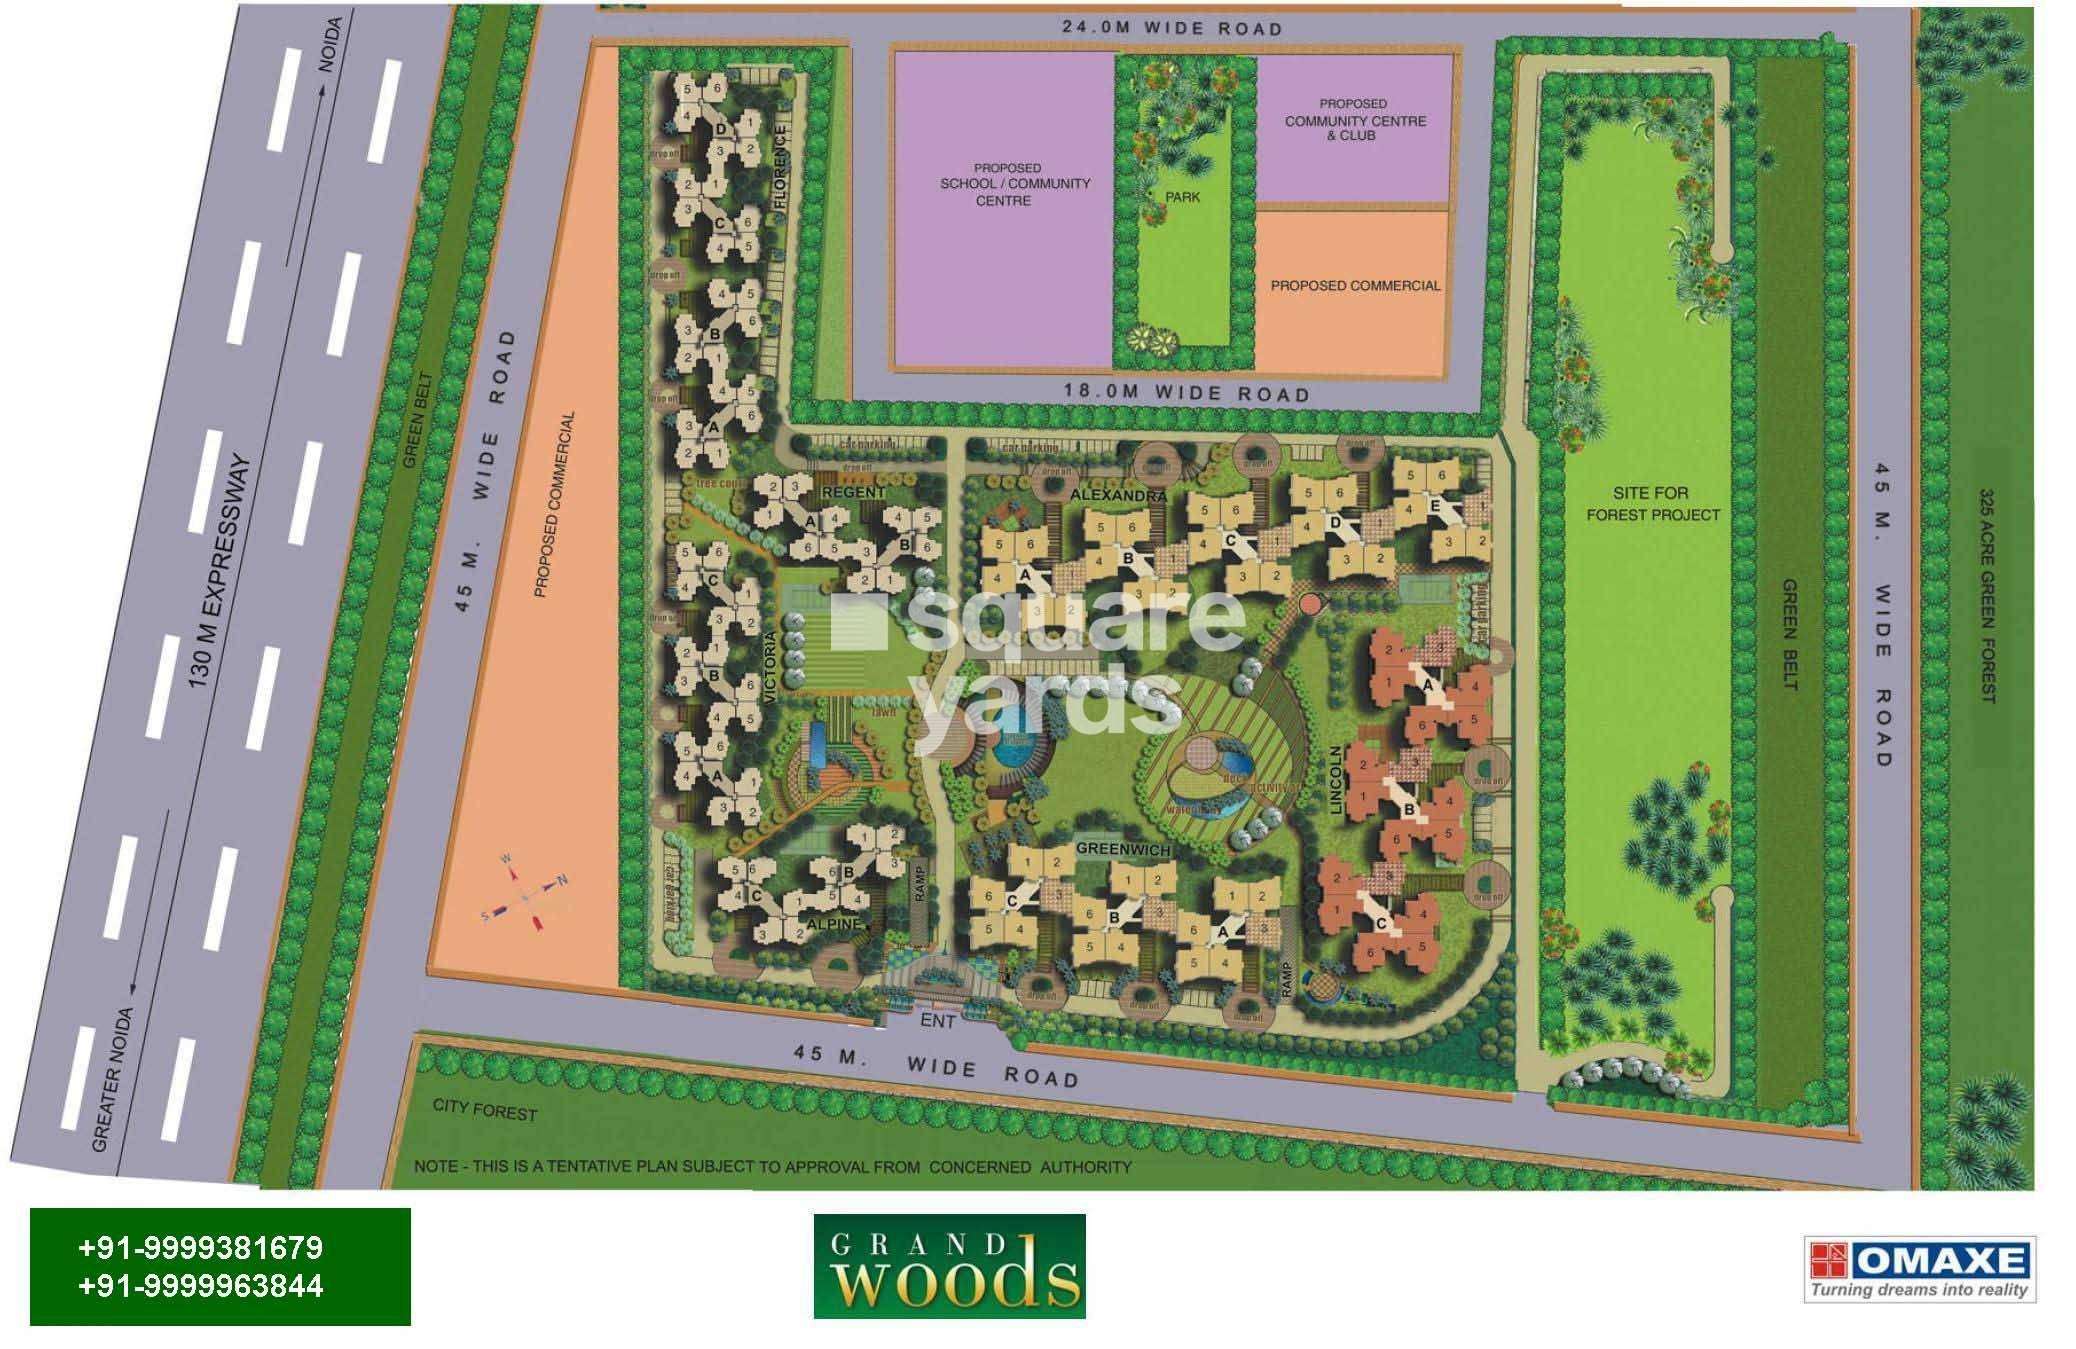 omaxe greenwood project master plan image1